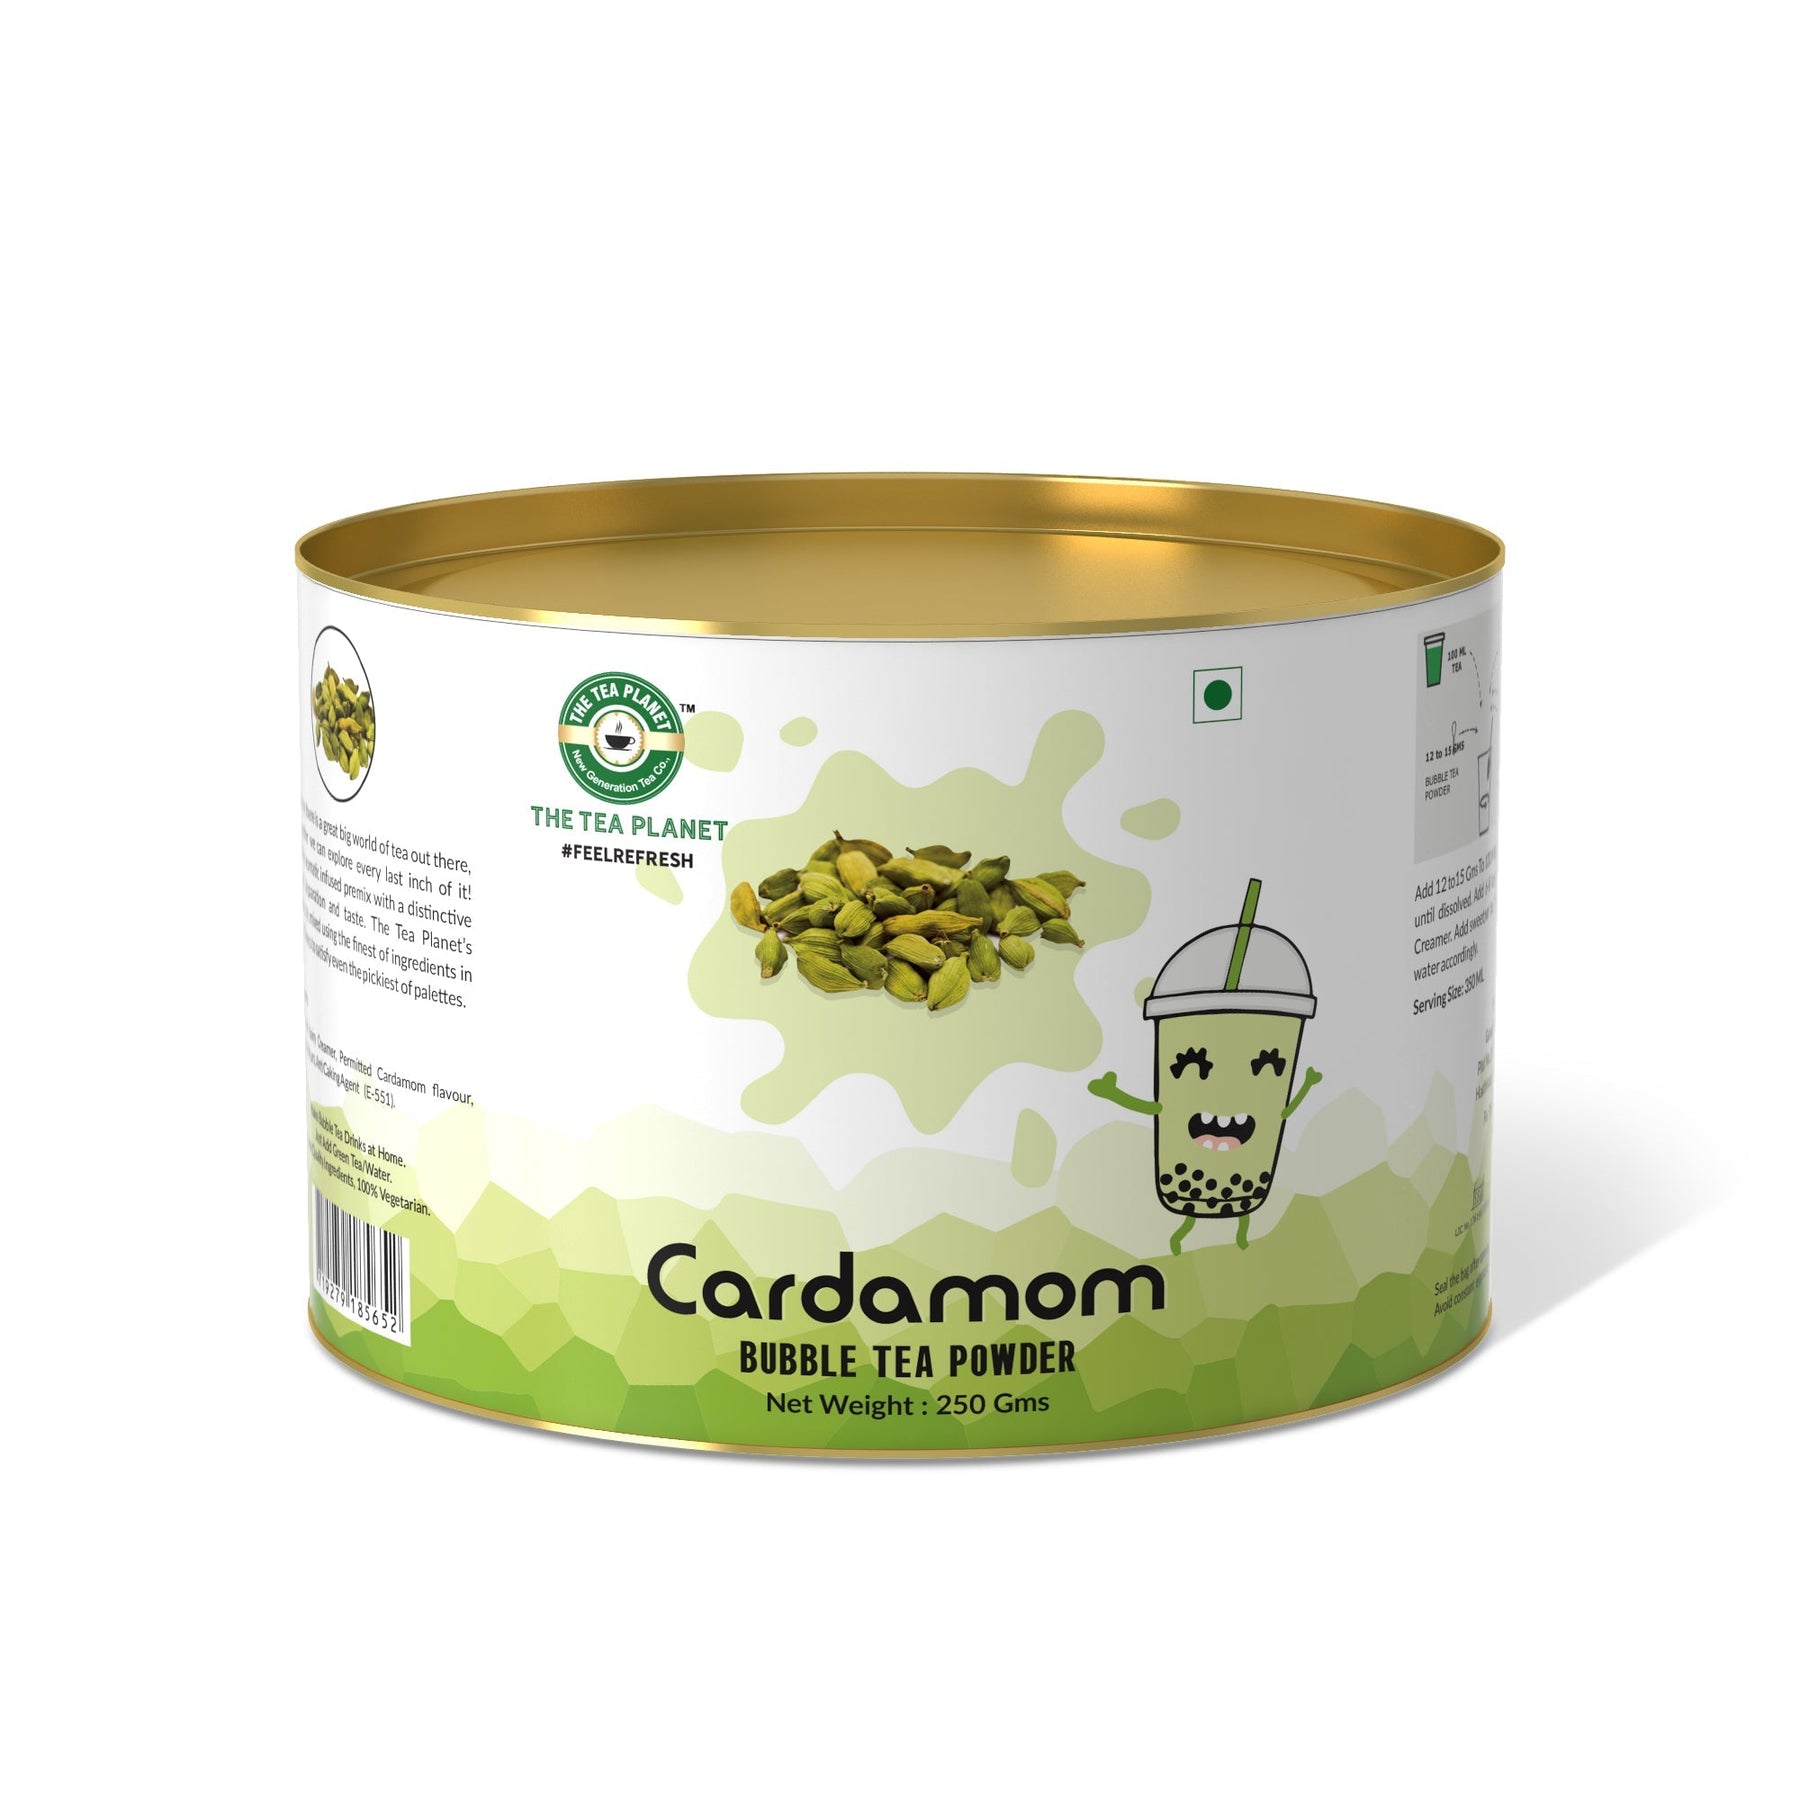 Cardamom Bubble Tea Premix - 400 gms